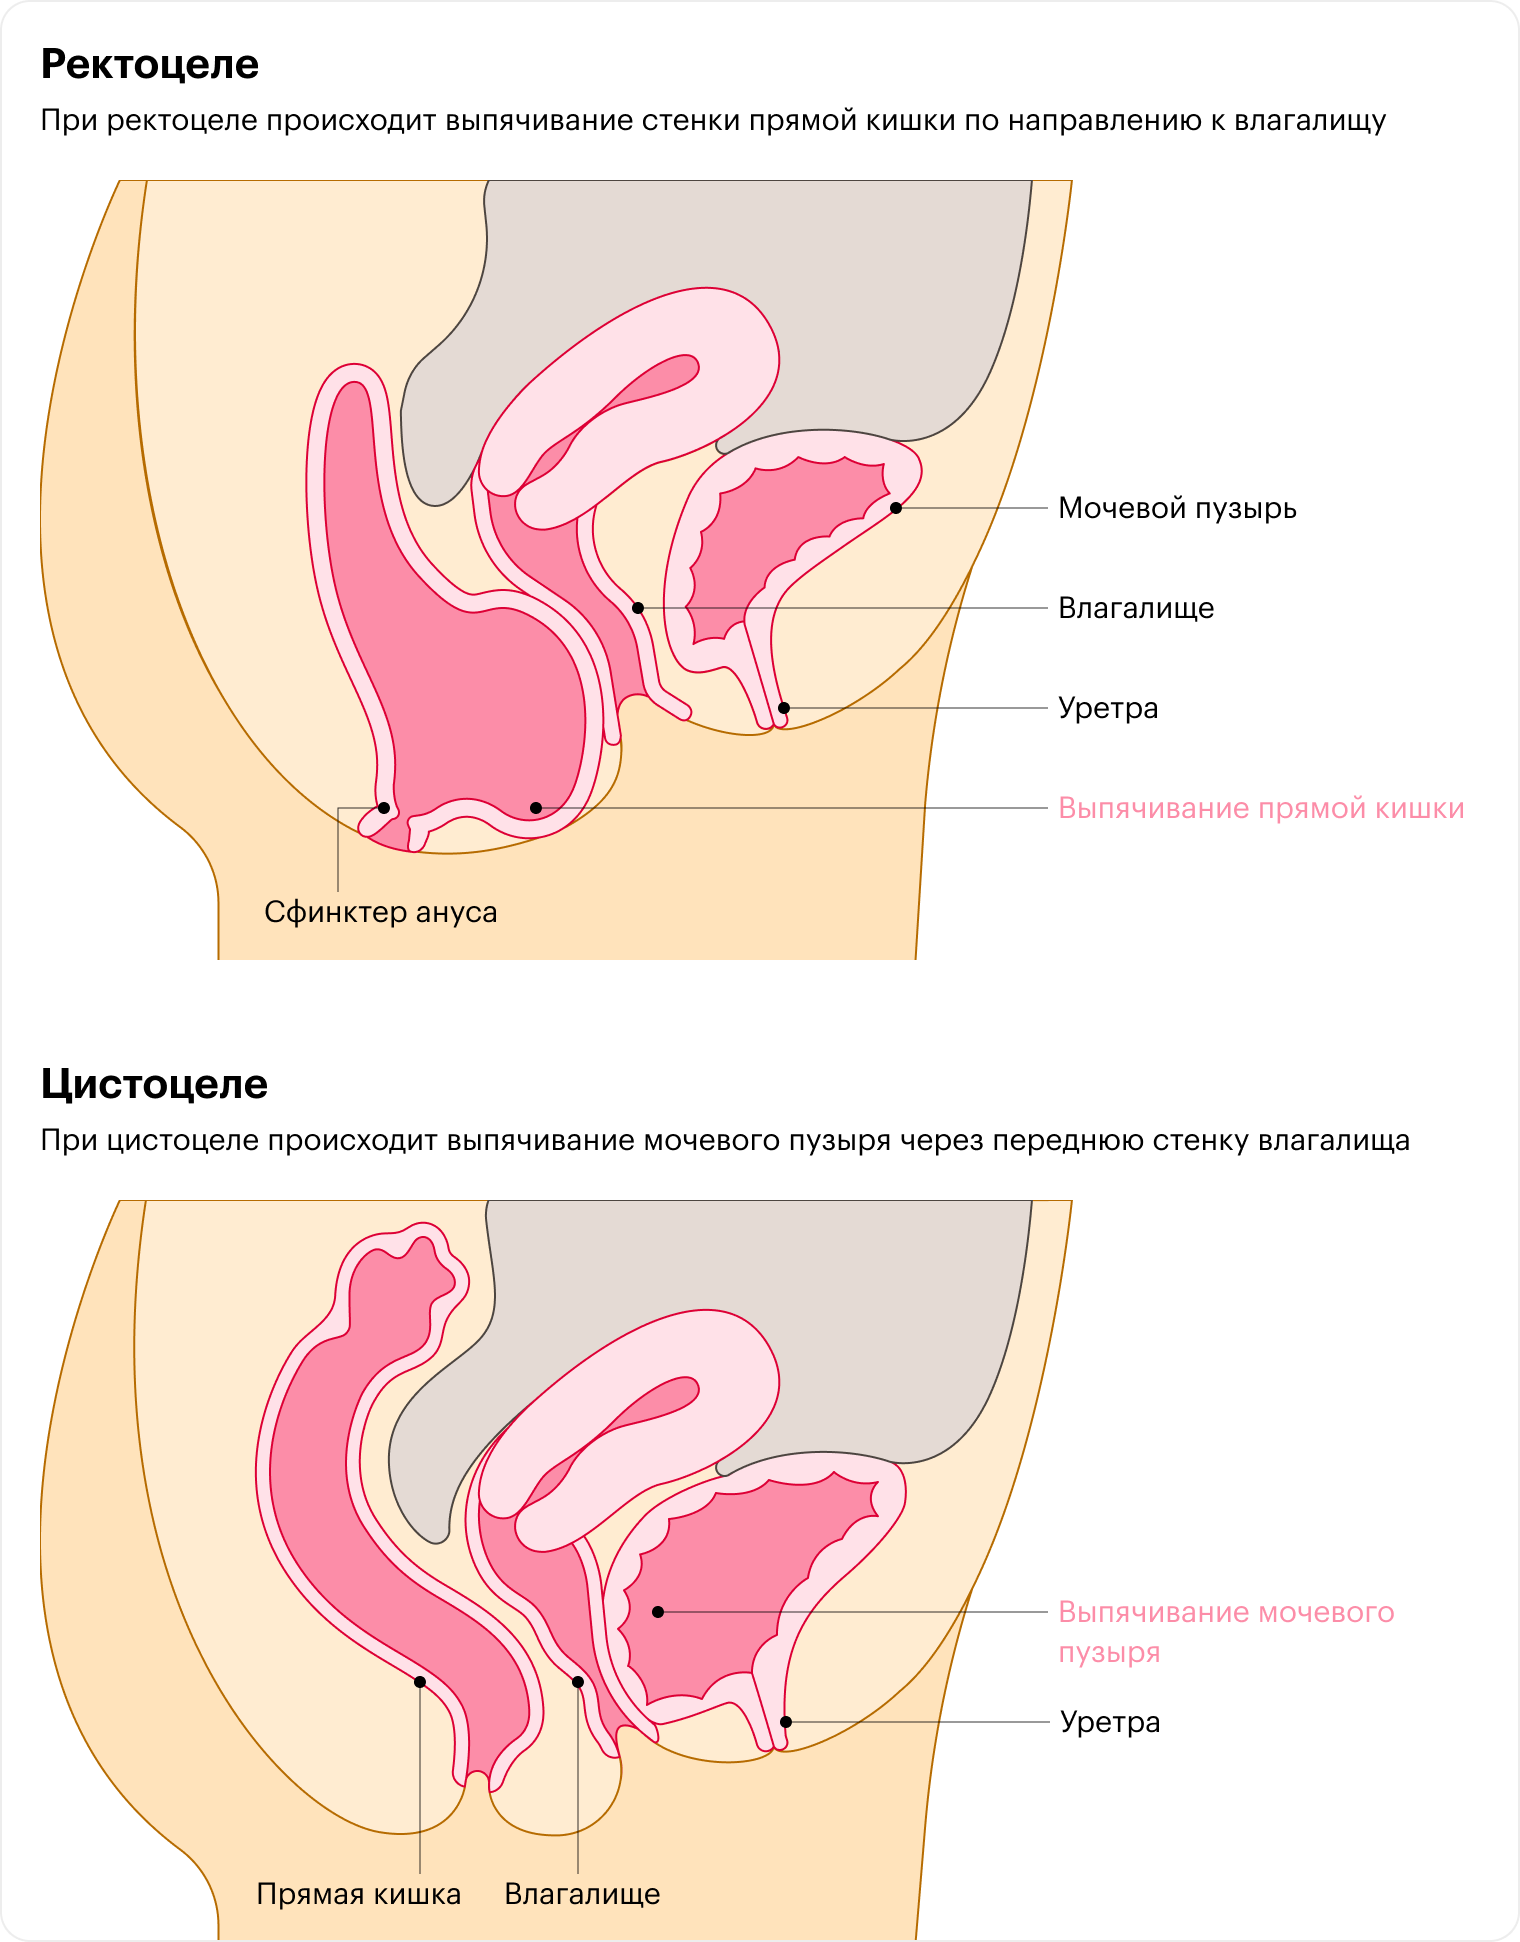 Сила мышц тазового дна у женщин после родов и влияние на нее консервативных методов лечения